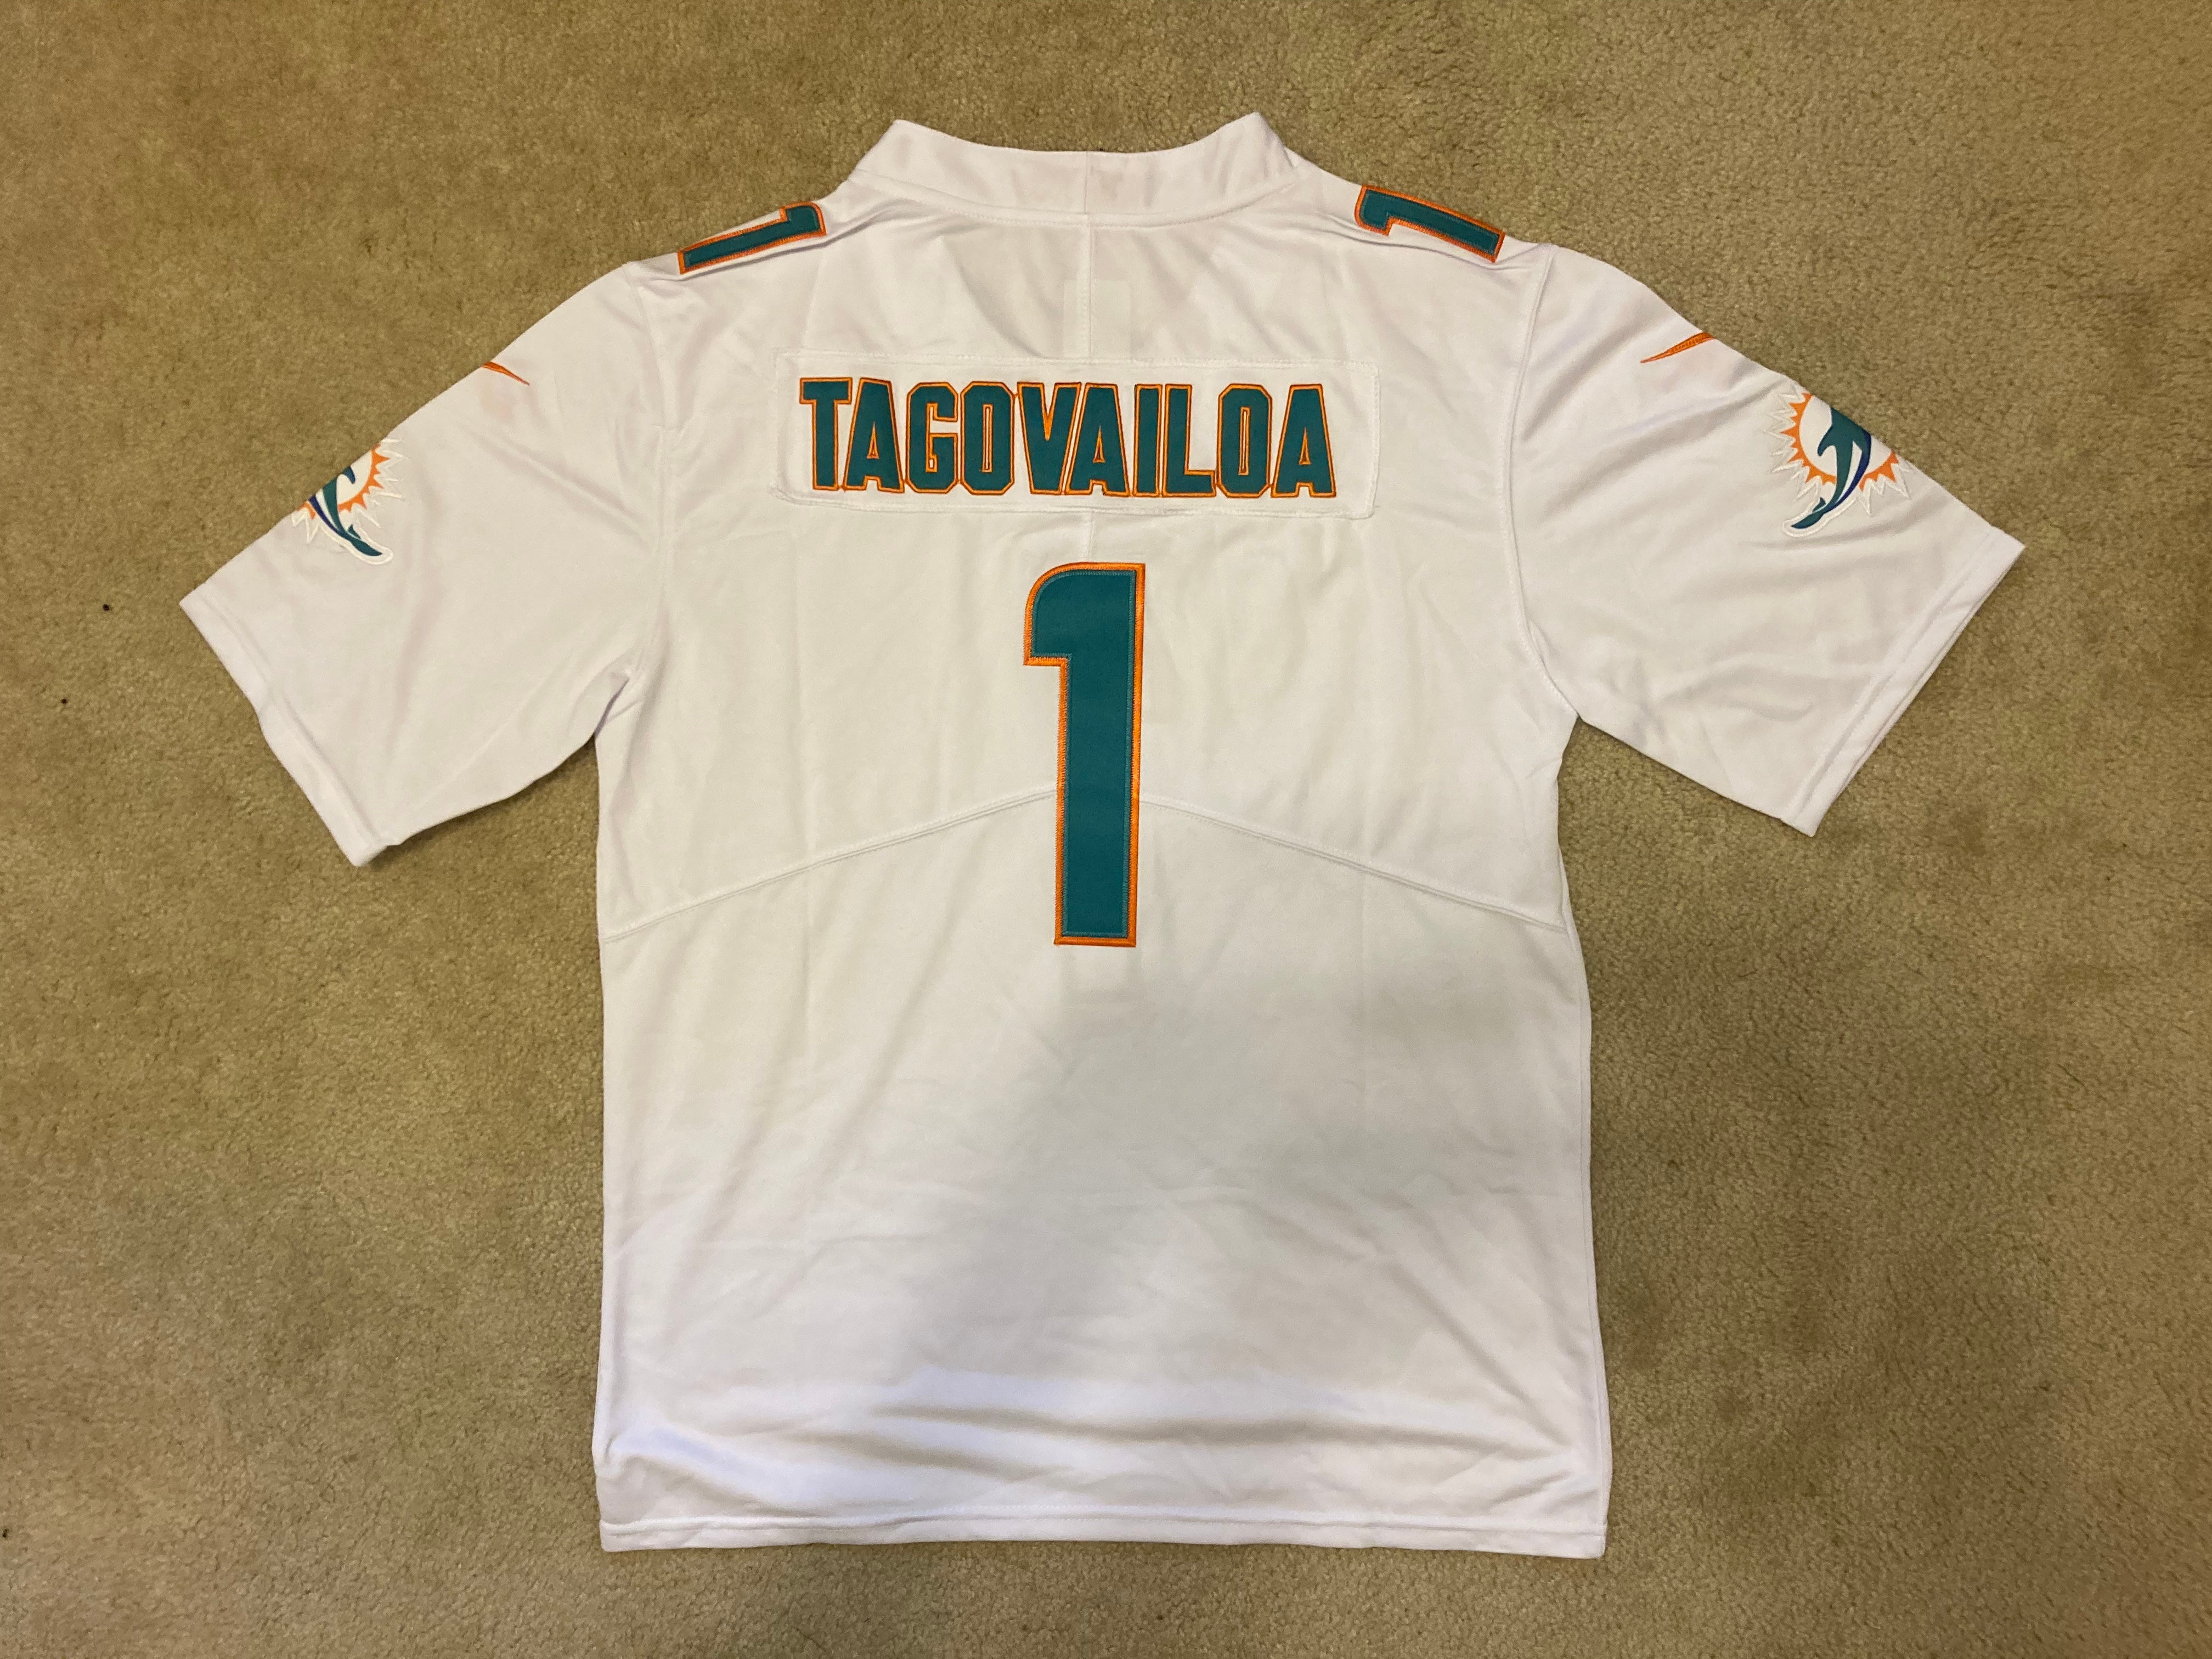 NEW - Men's Stitched Nike NFL Jersey - Tua Tagovailoa - Dolphins - S-3XL